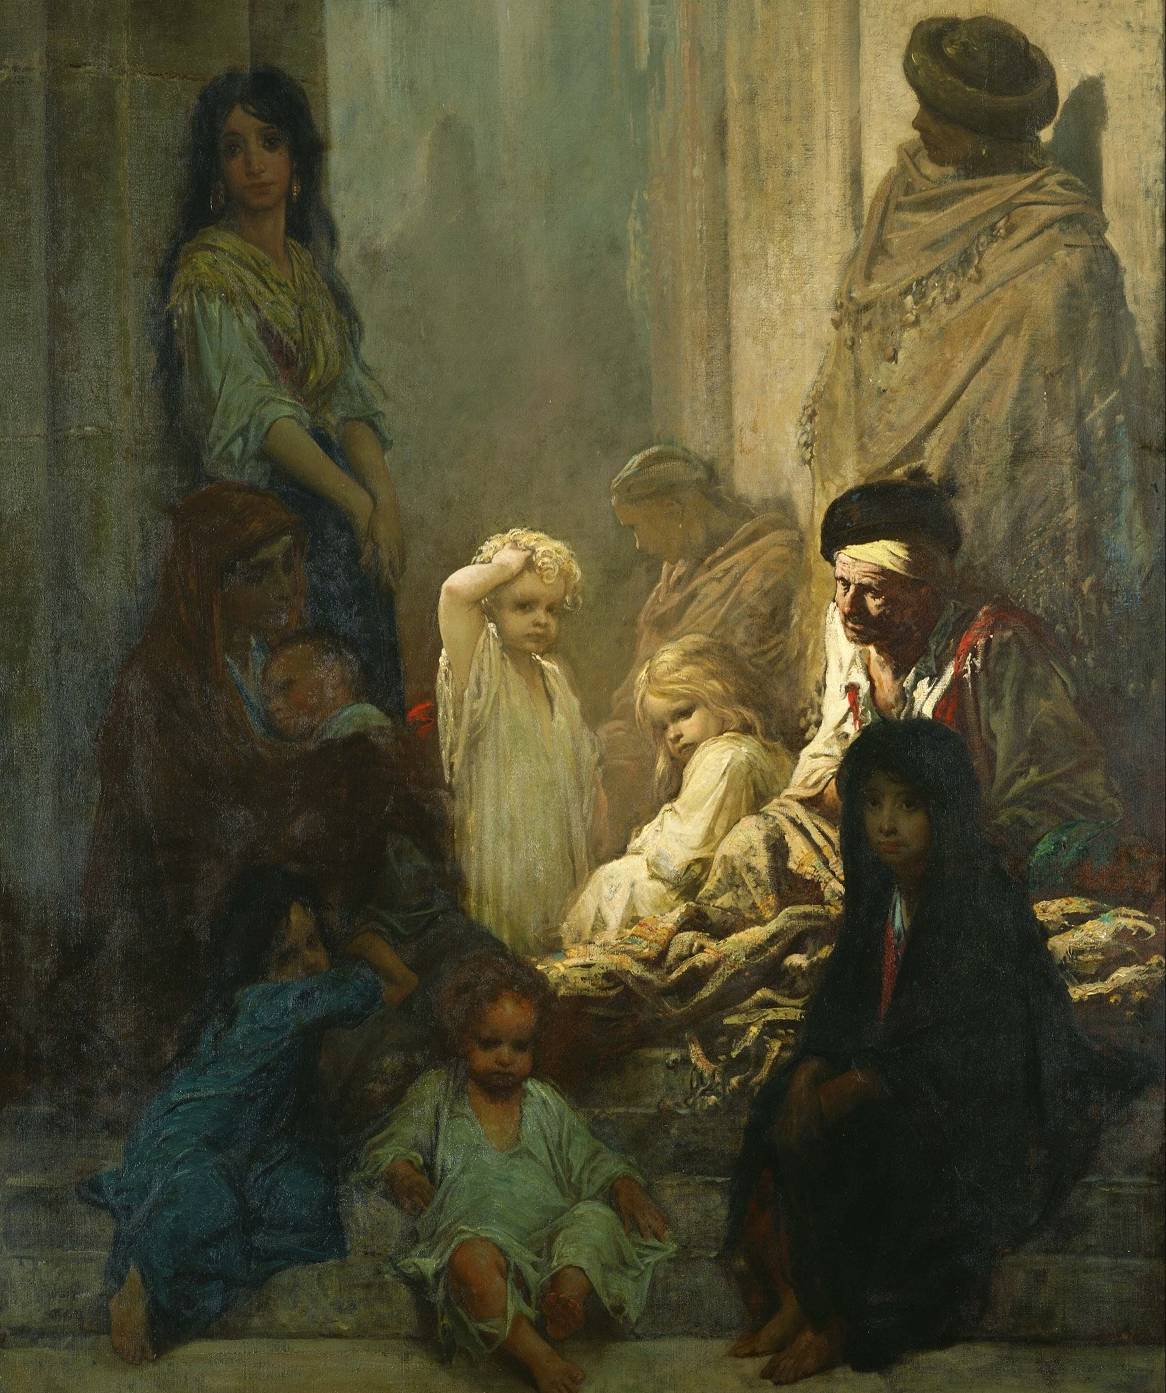 La Siesta, souvenir d'Espagne, Gustave Doré, circa 1868 - source : WikiCommons